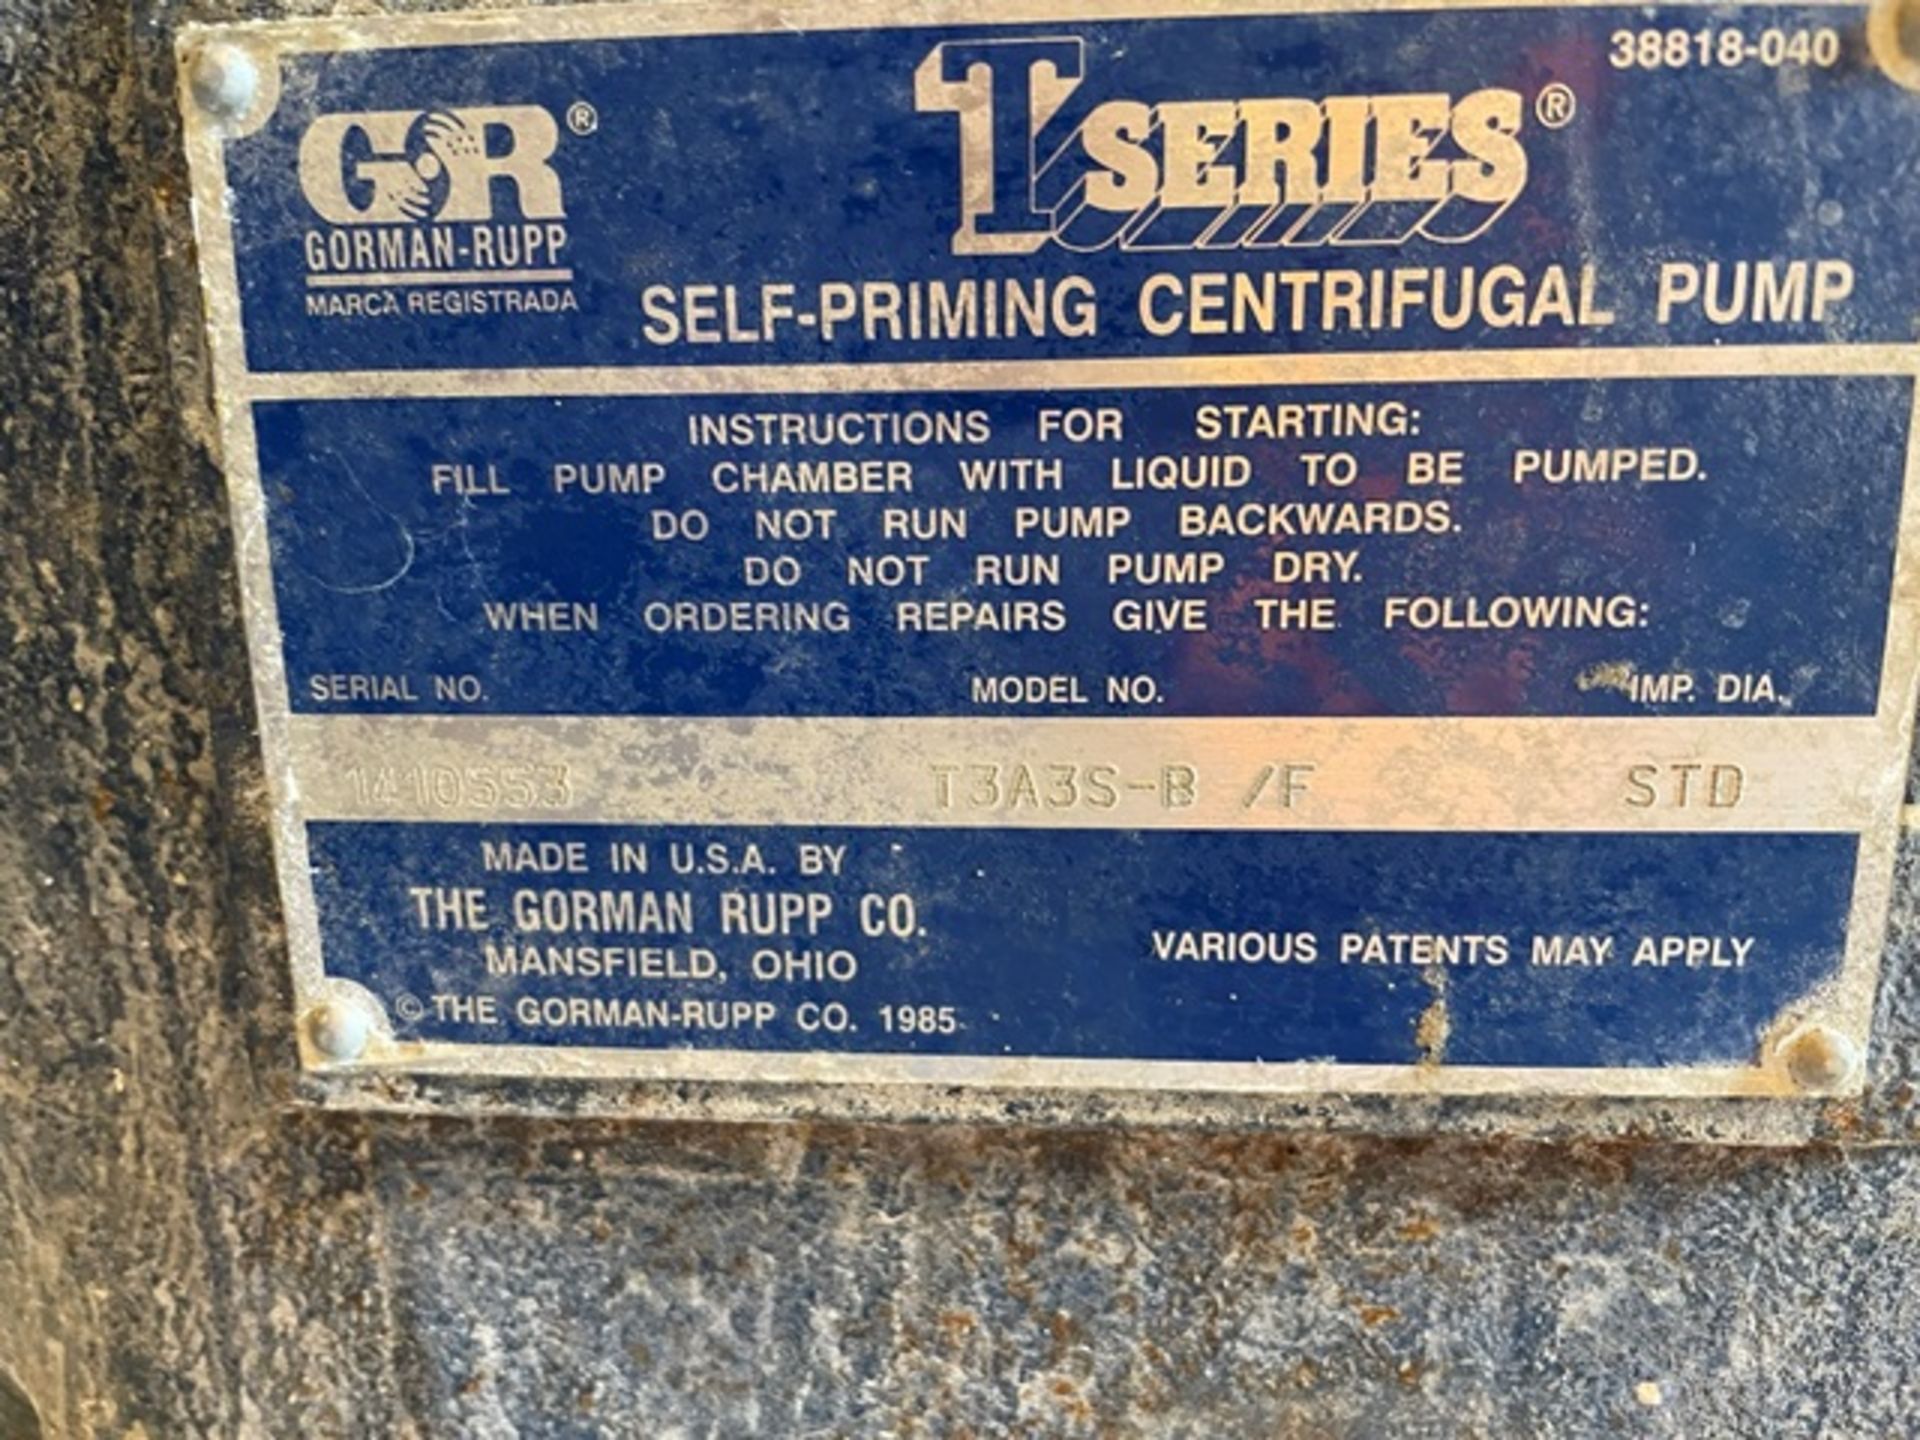 Reliance 30 HP Motor w/Gorman Rupp Super T Series Pump - Image 2 of 3